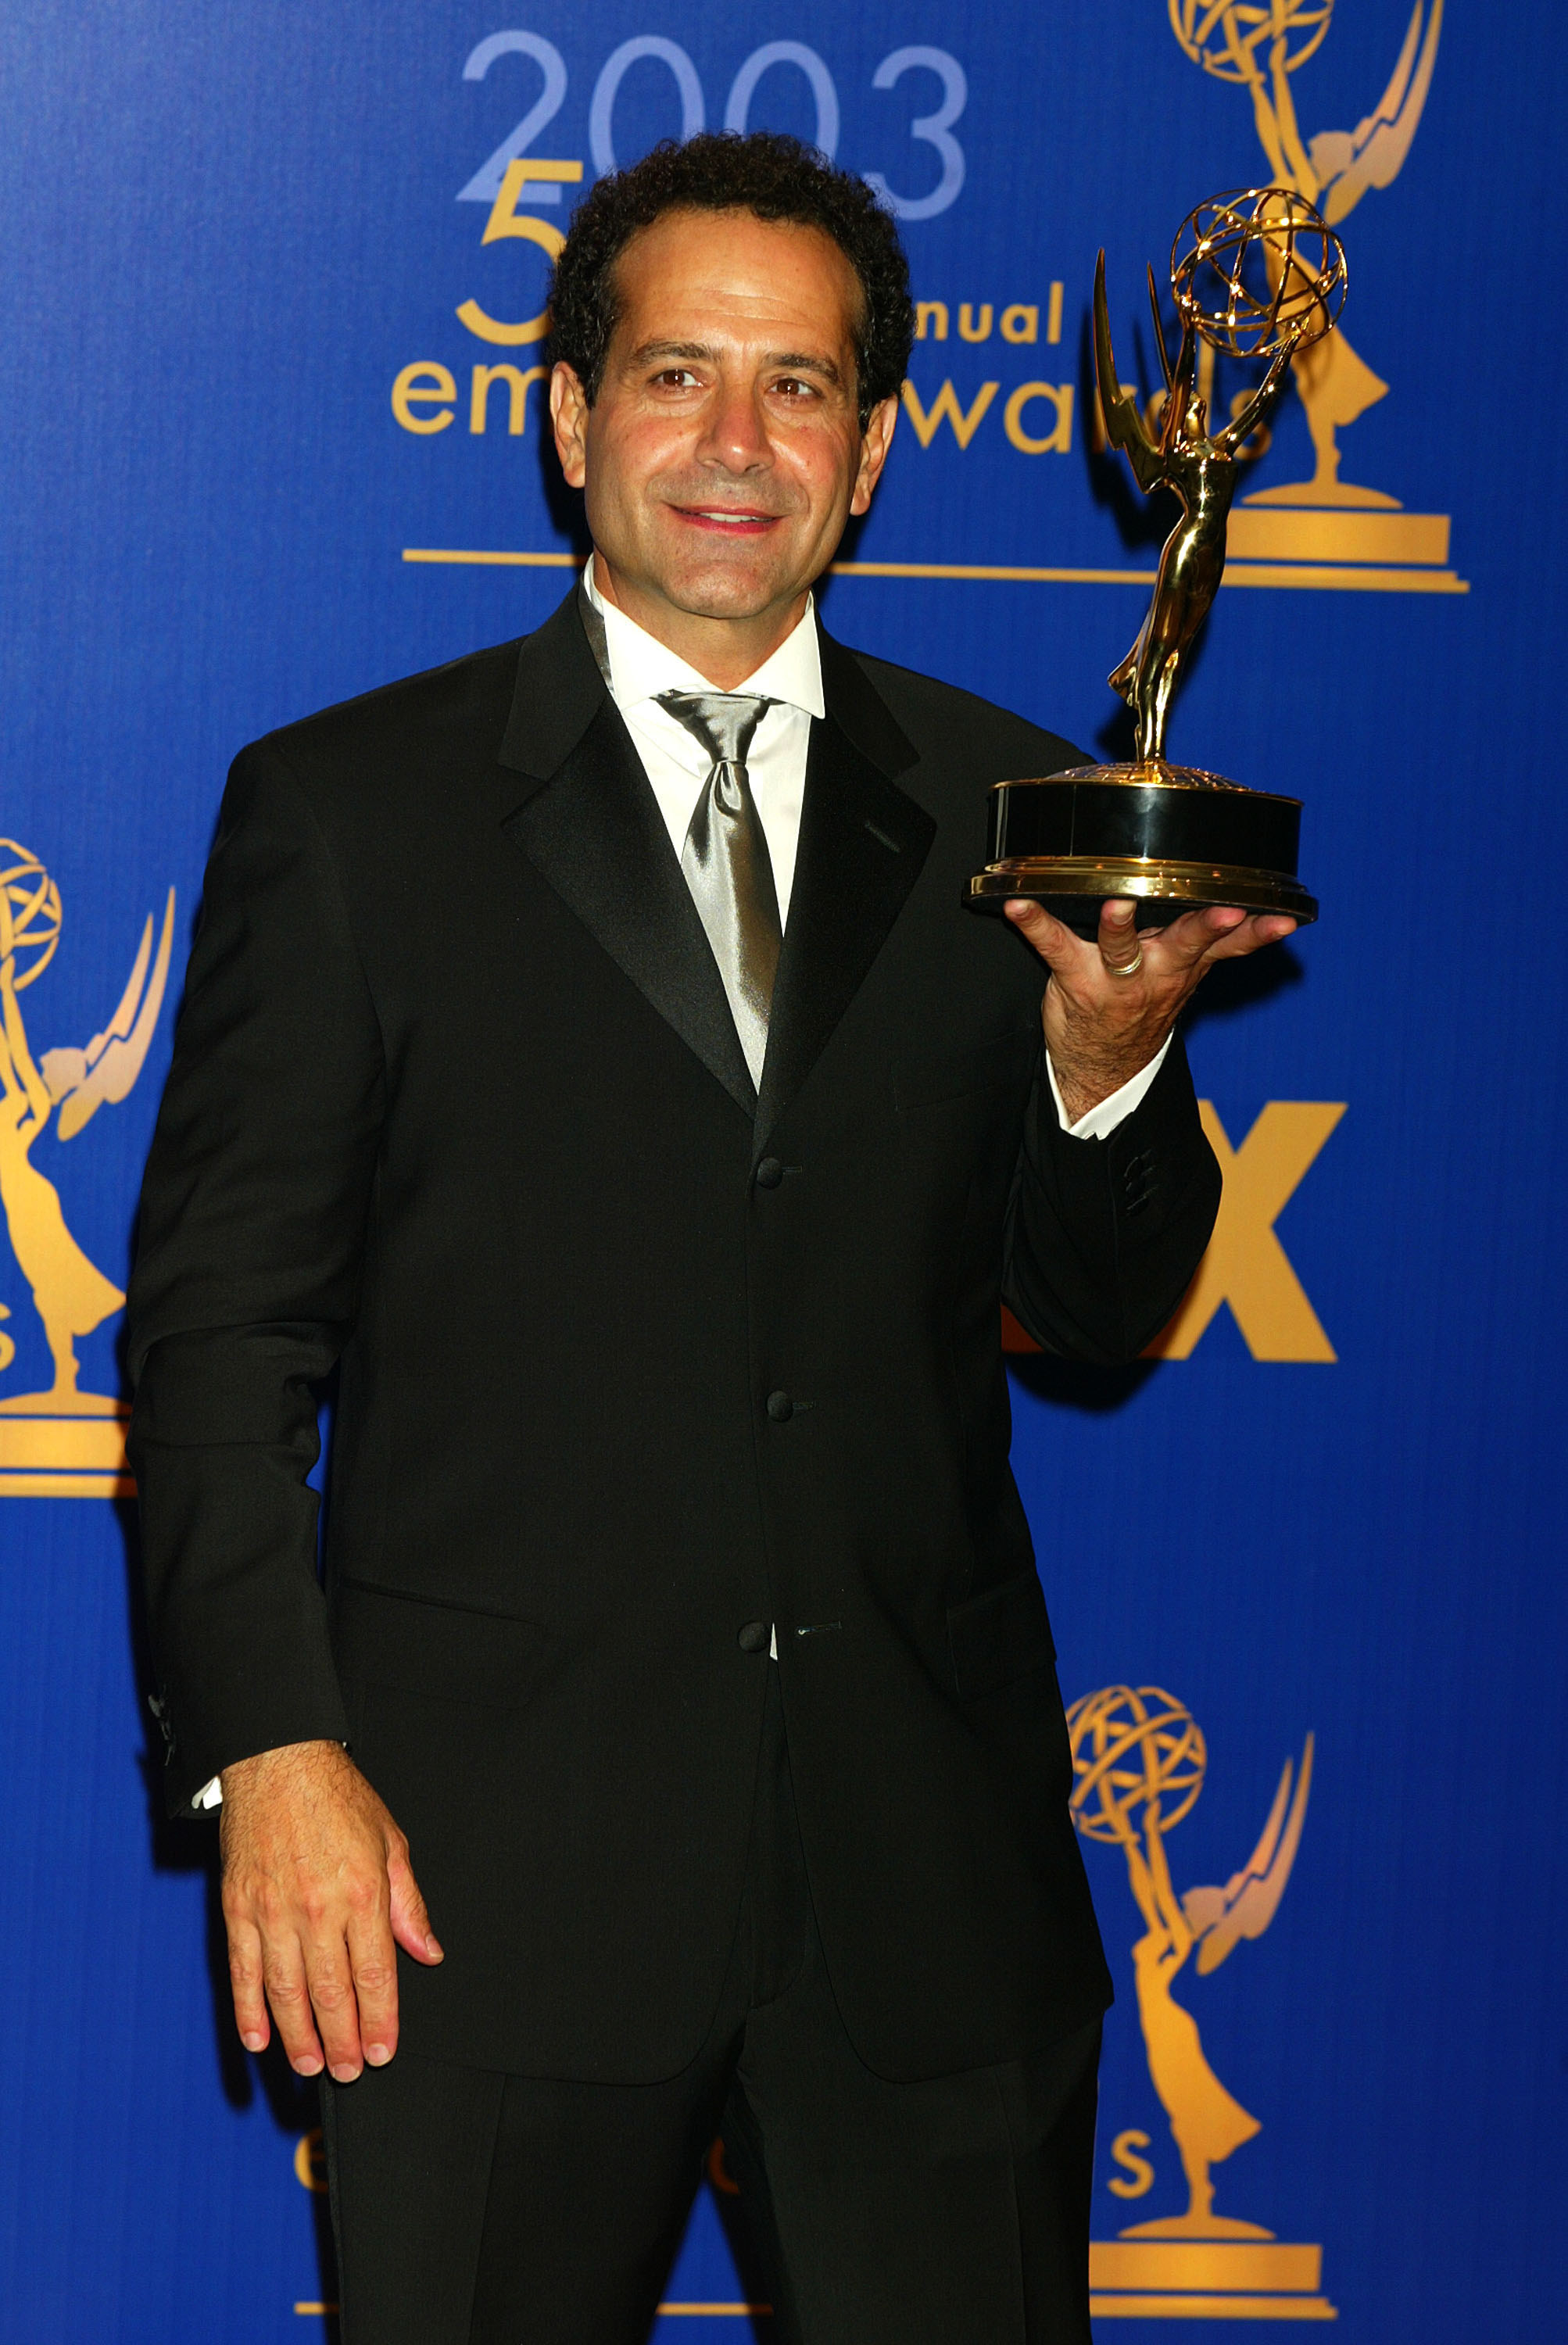 Tony Shalhoub holding an Emmy award